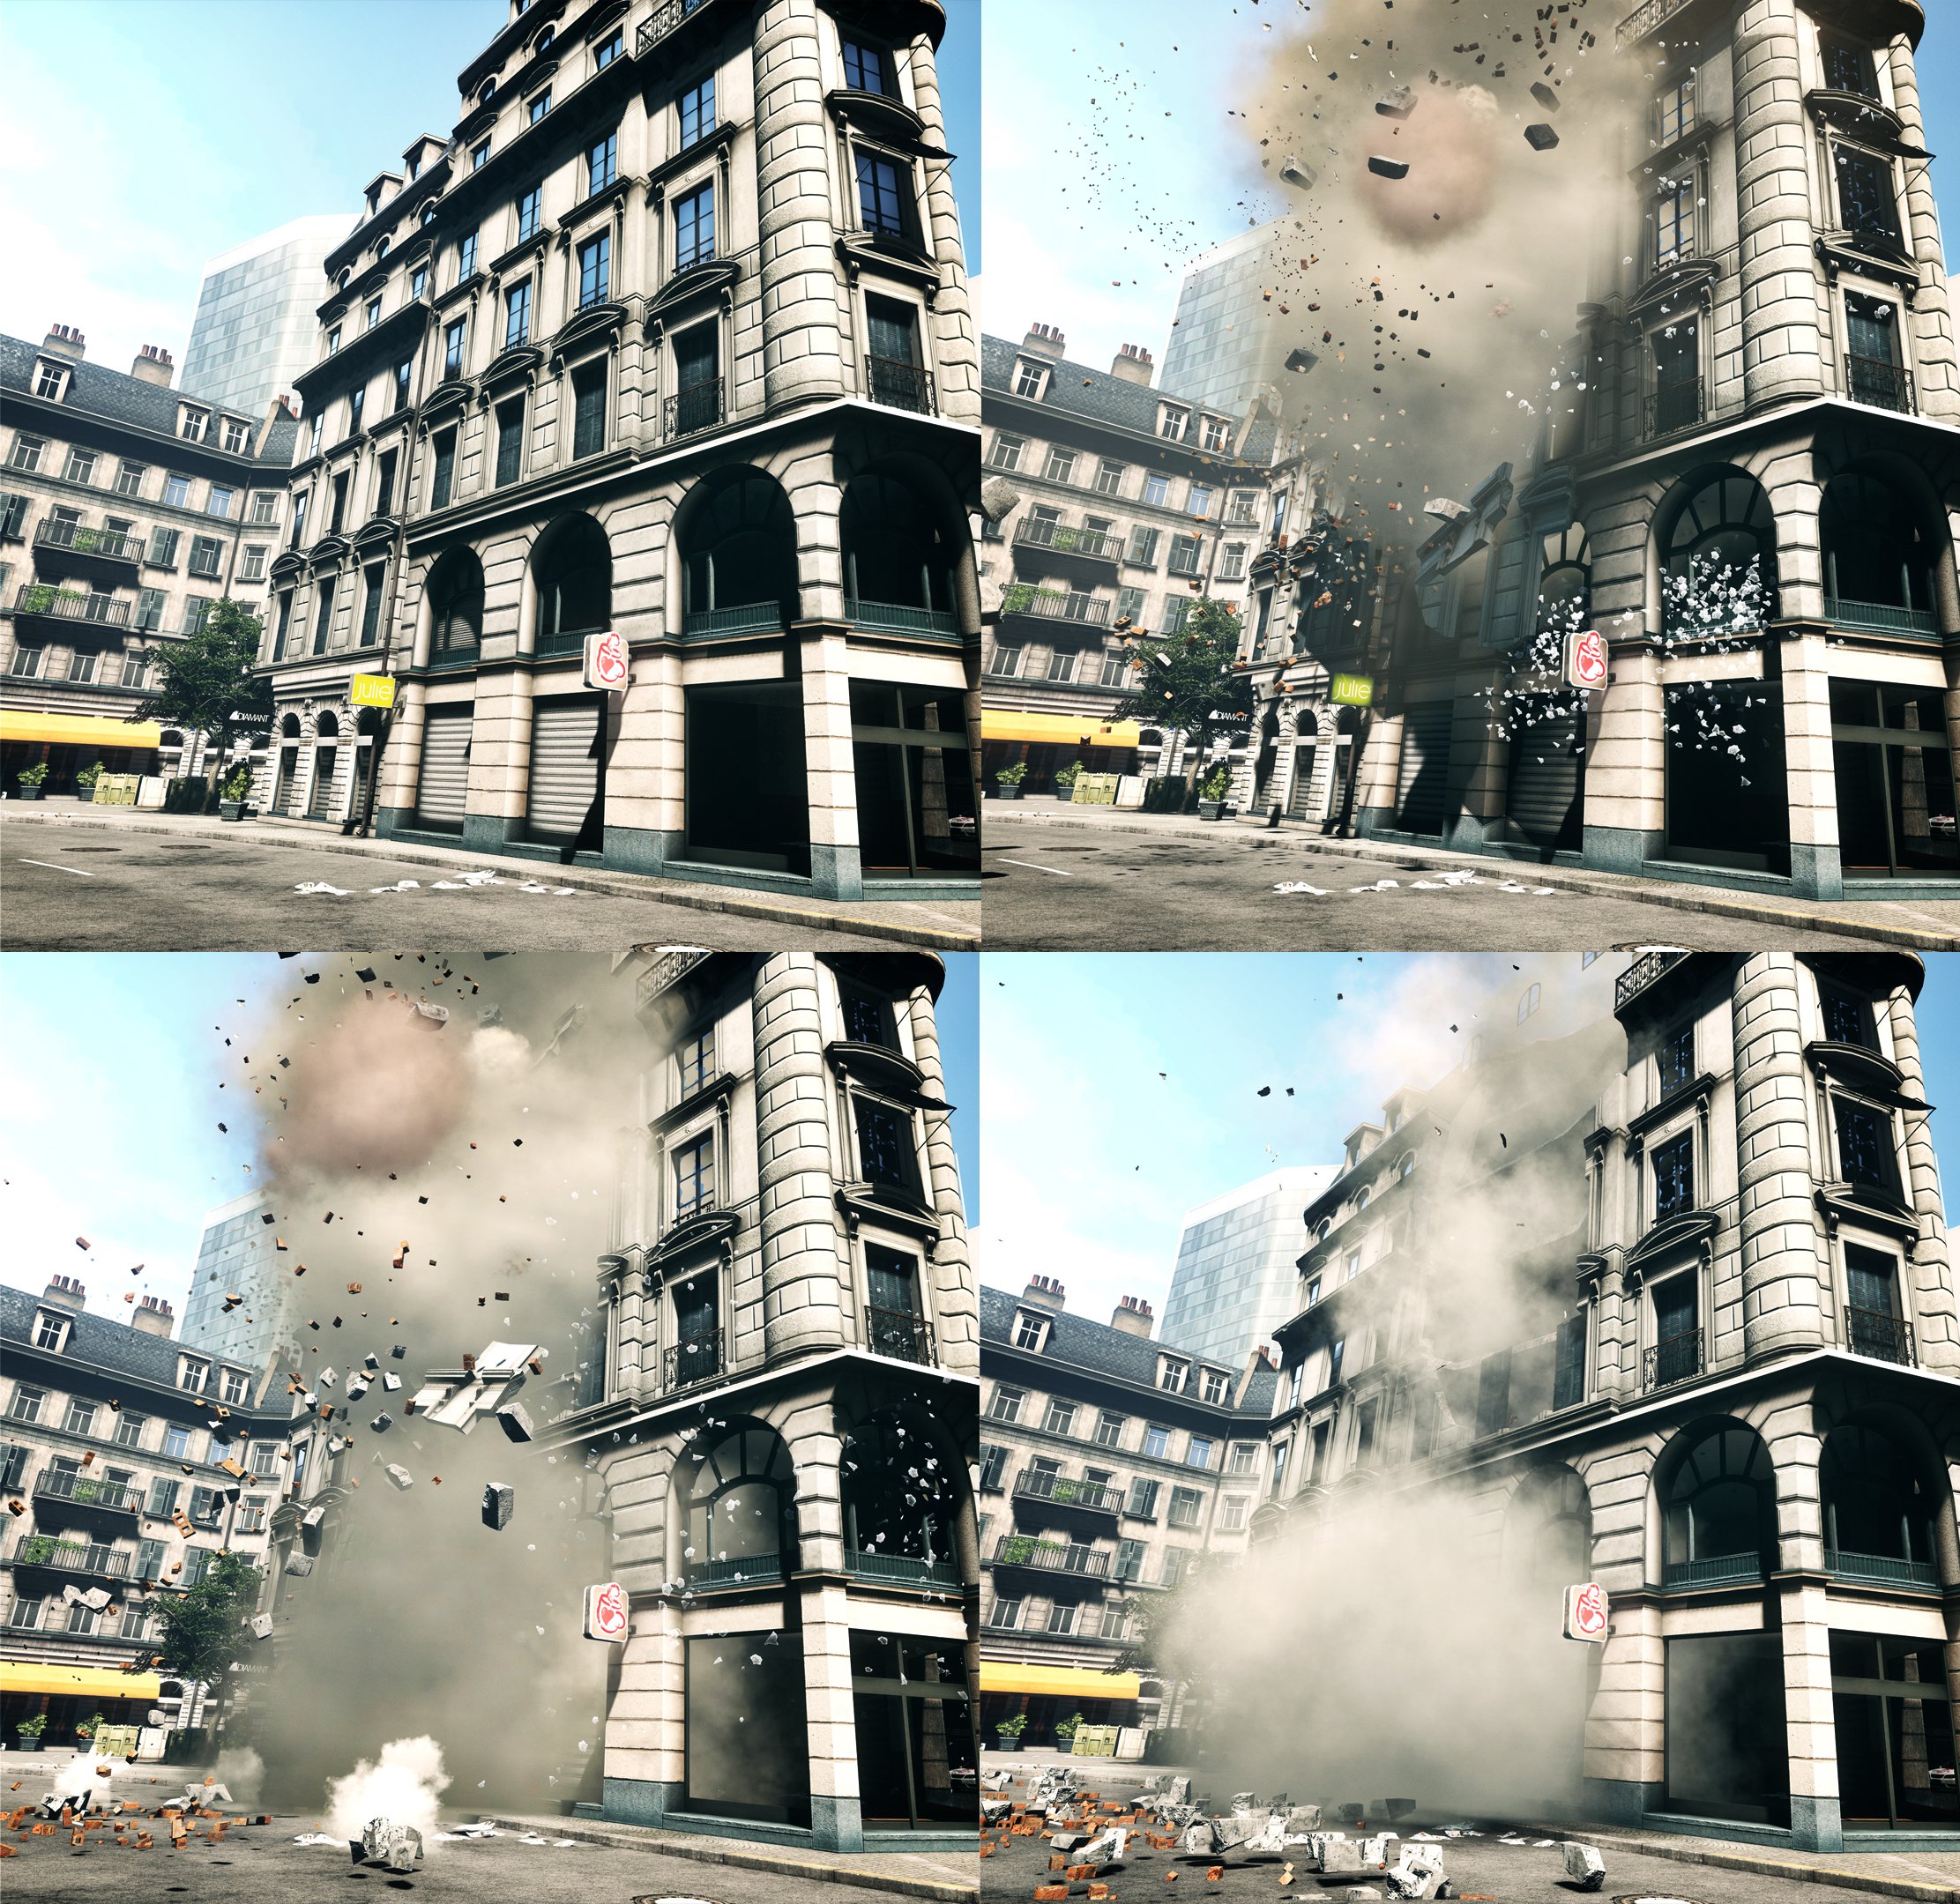 Battlefield 4: Official Levolution Features Video 